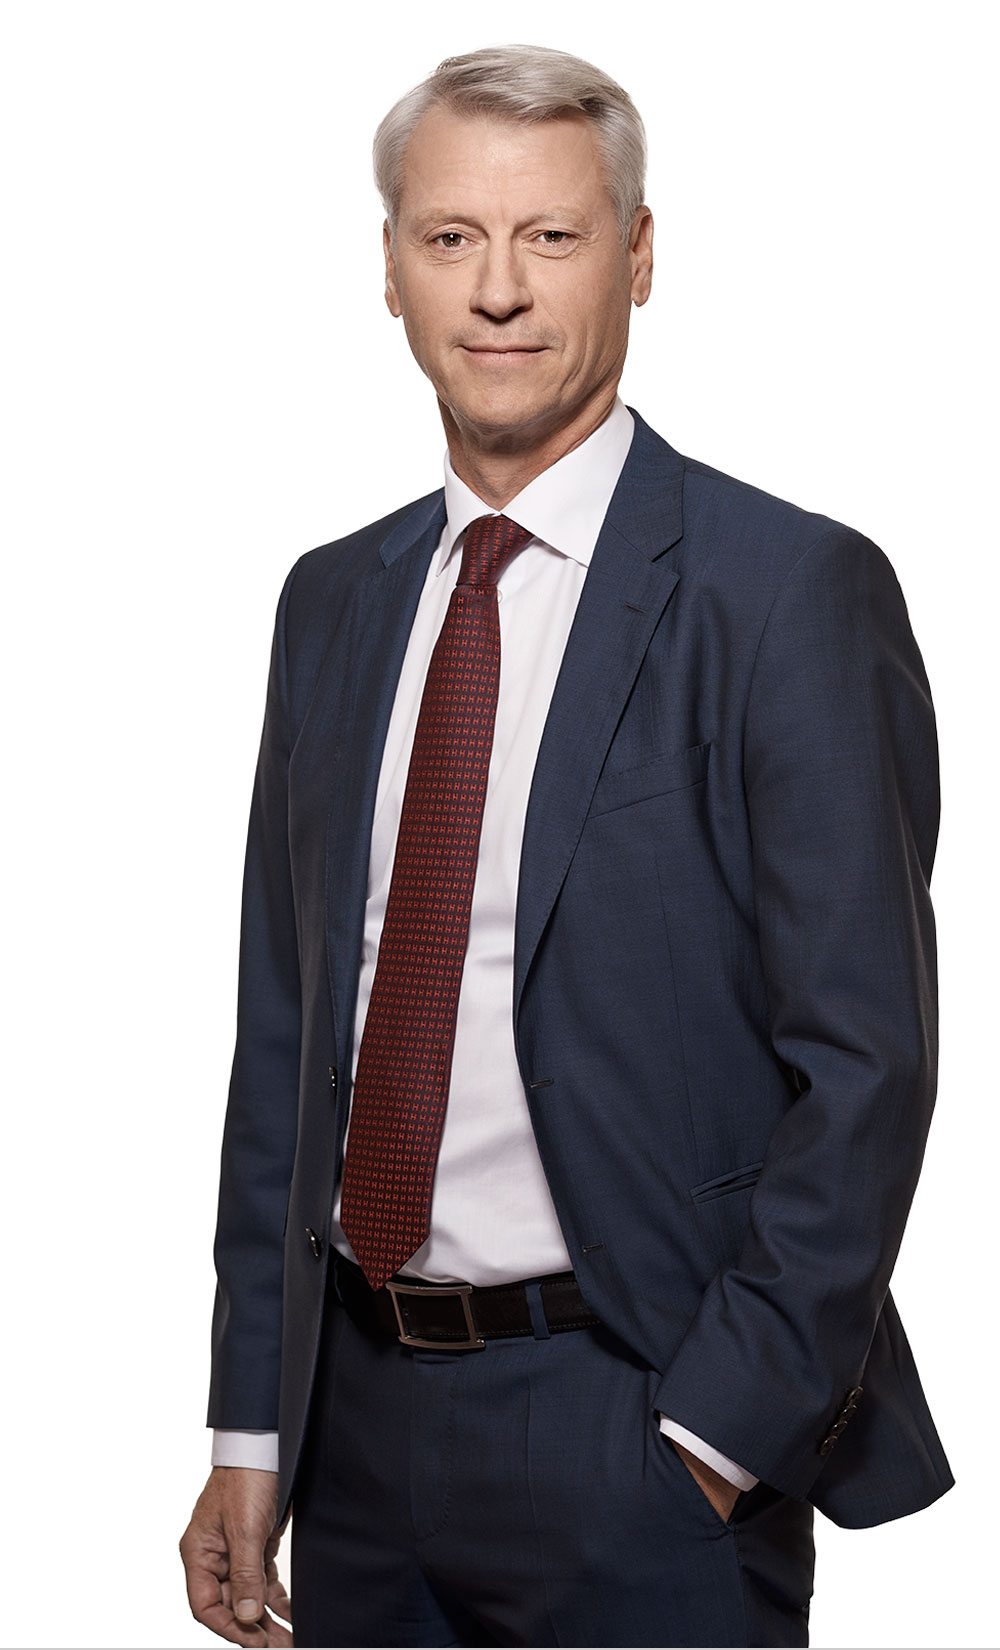 Willem Mutsaerts, Head of Global Procurement and Sustainability